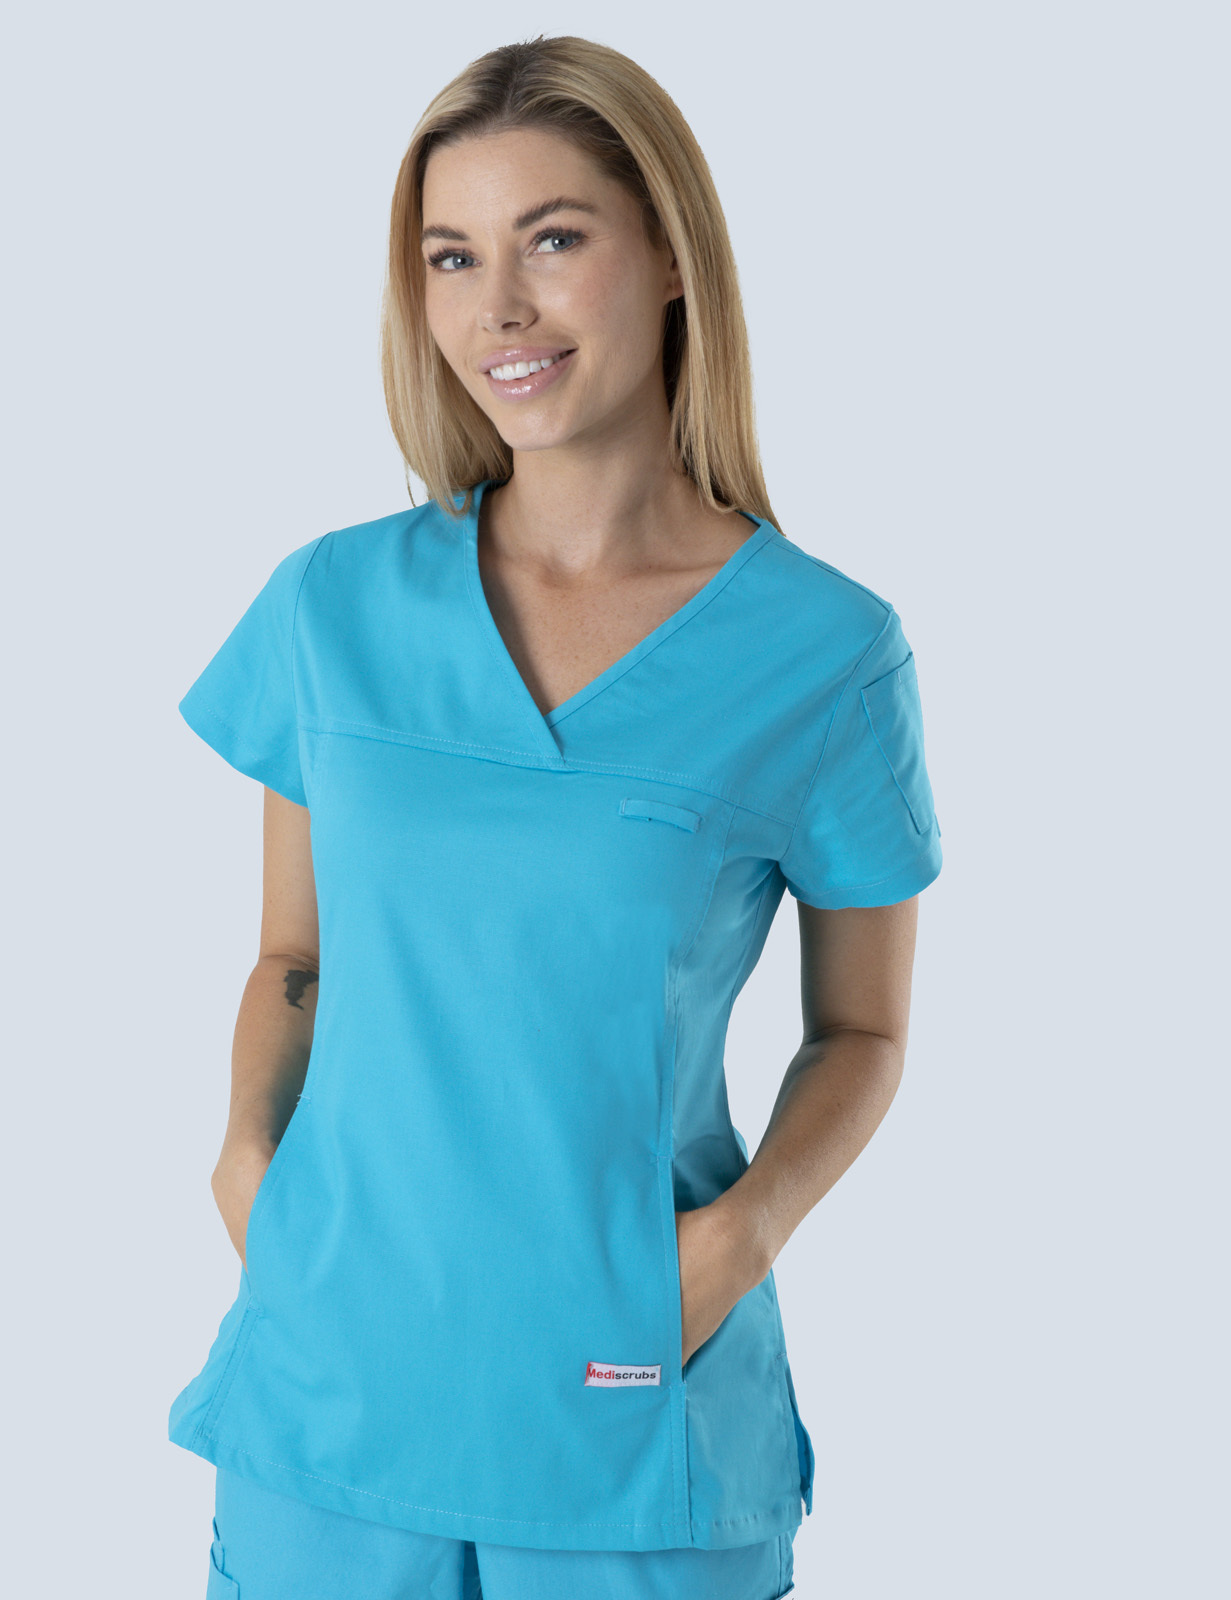 Queensland Children's Hospital - ED Doctor (Women's Fit Solid Scrub Top in Aqua incl Logos)